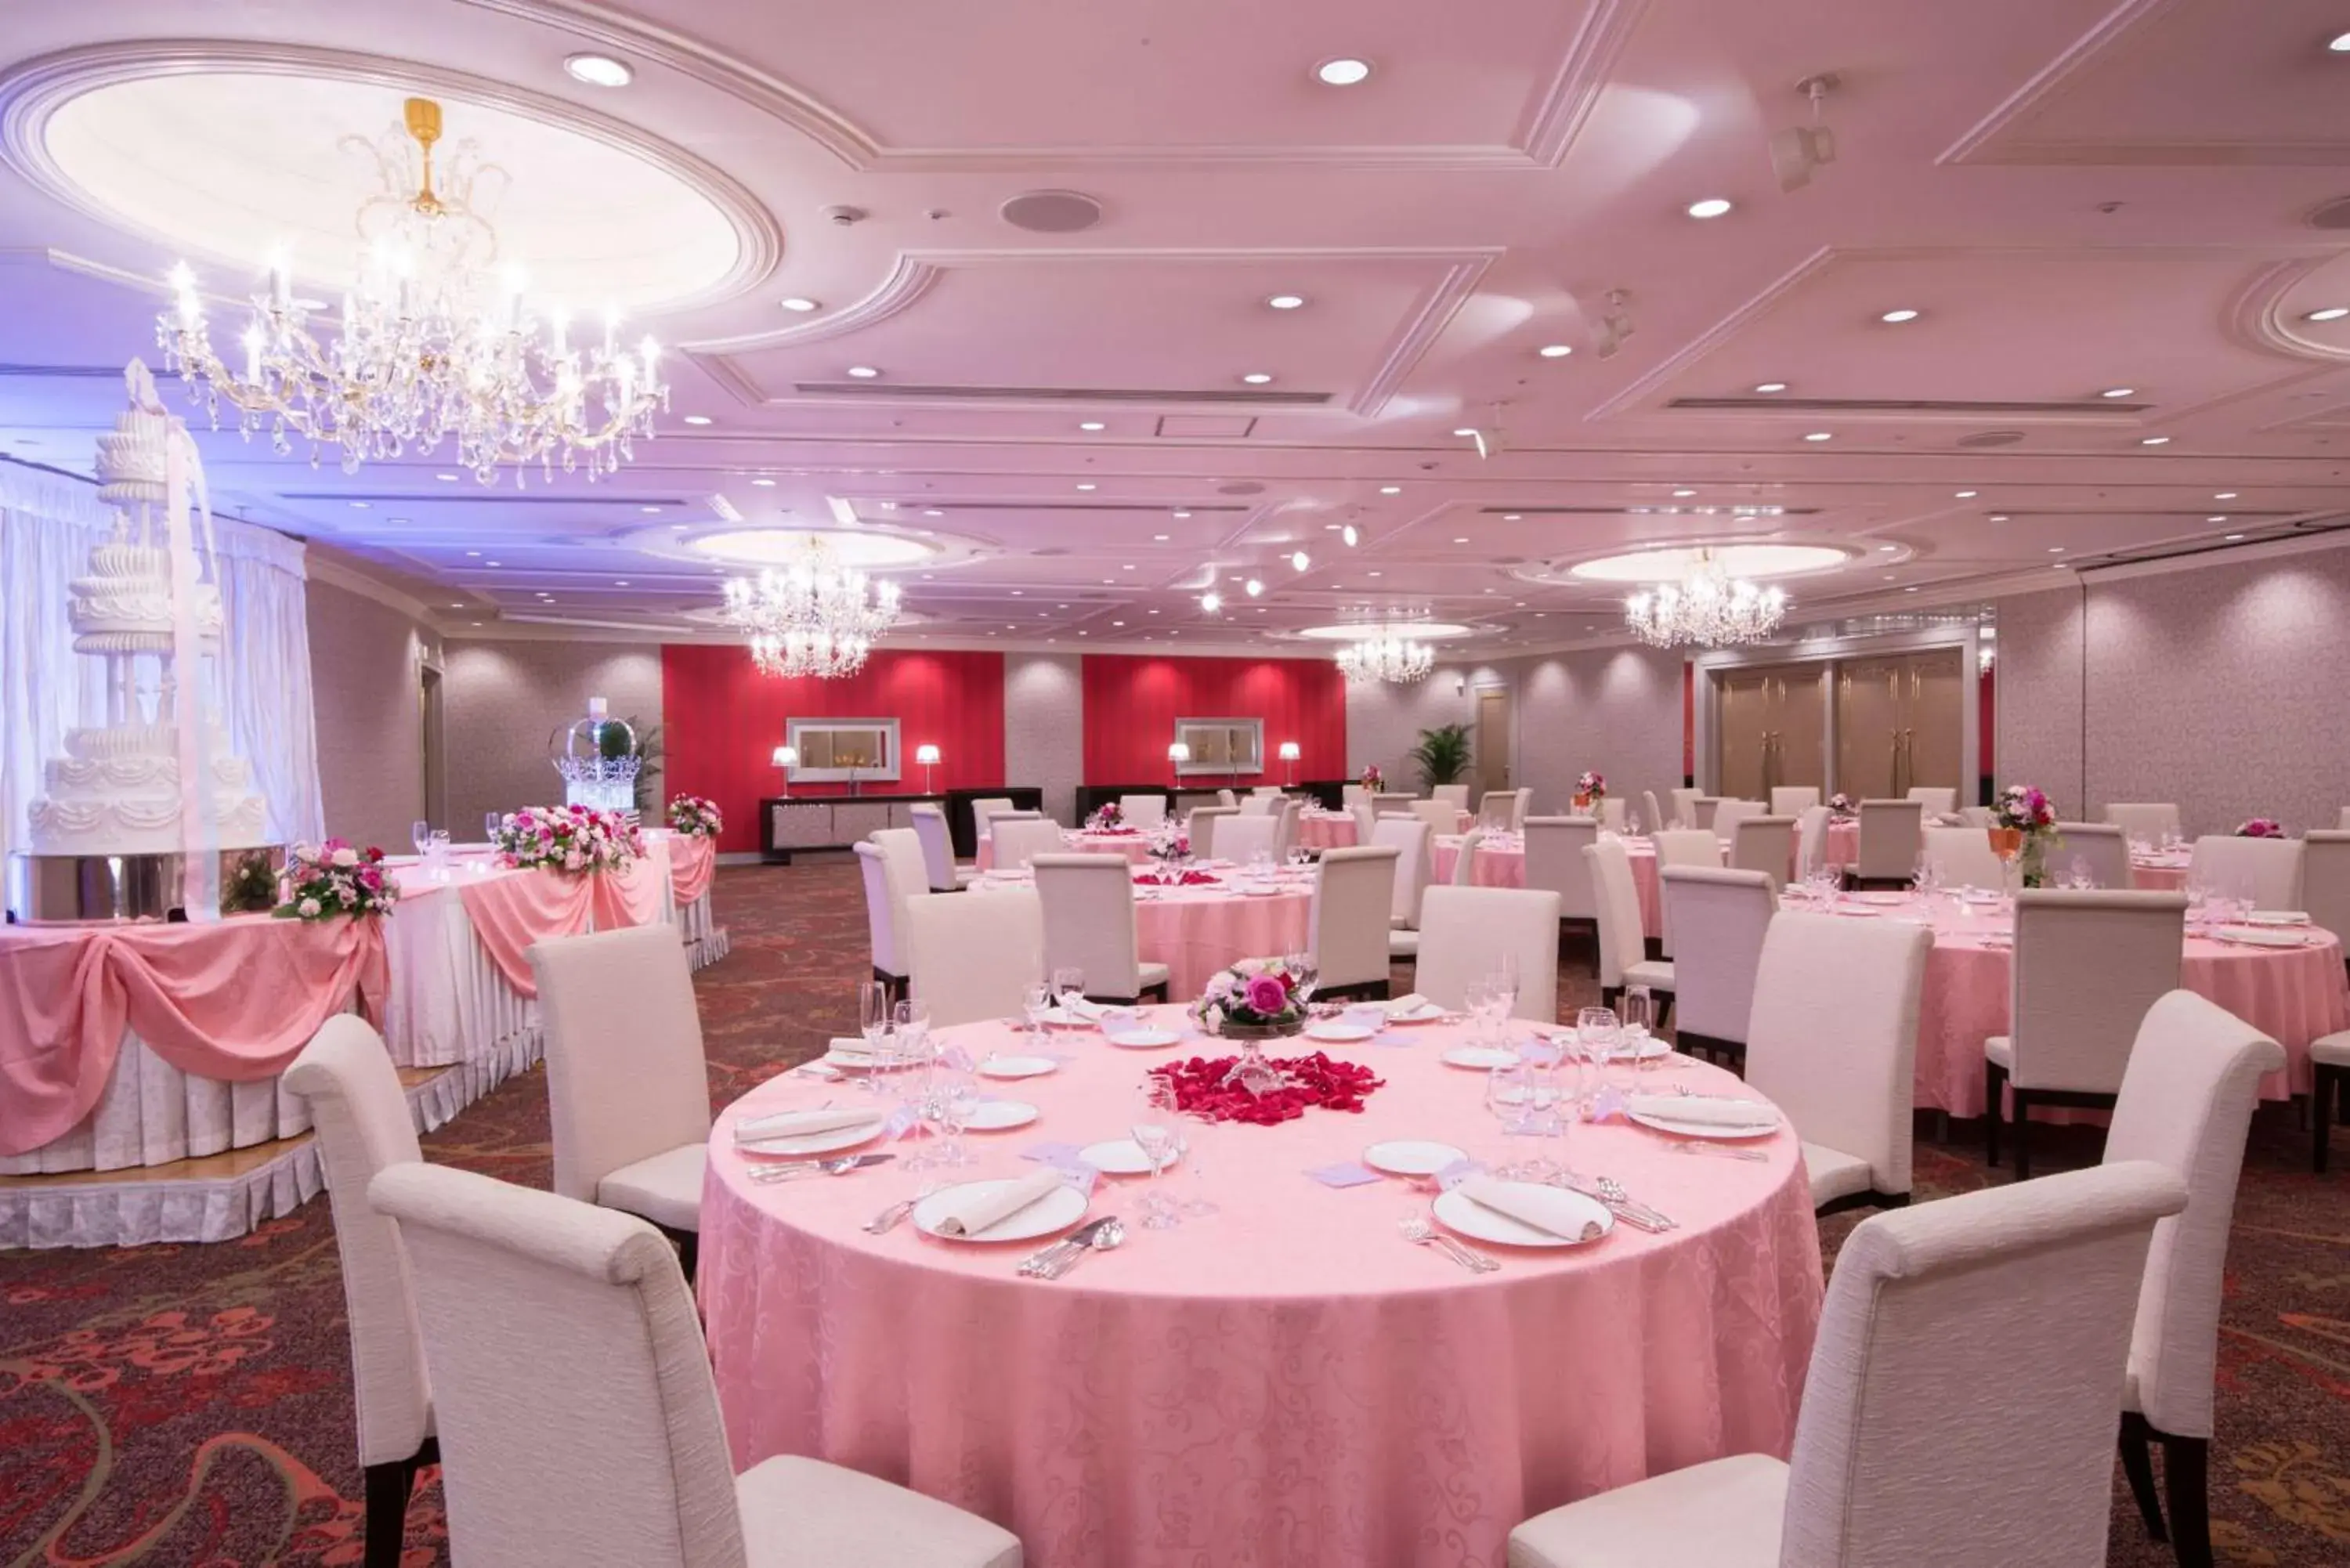 Meeting/conference room, Banquet Facilities in Hilton Tokyo Narita Airport Hotel